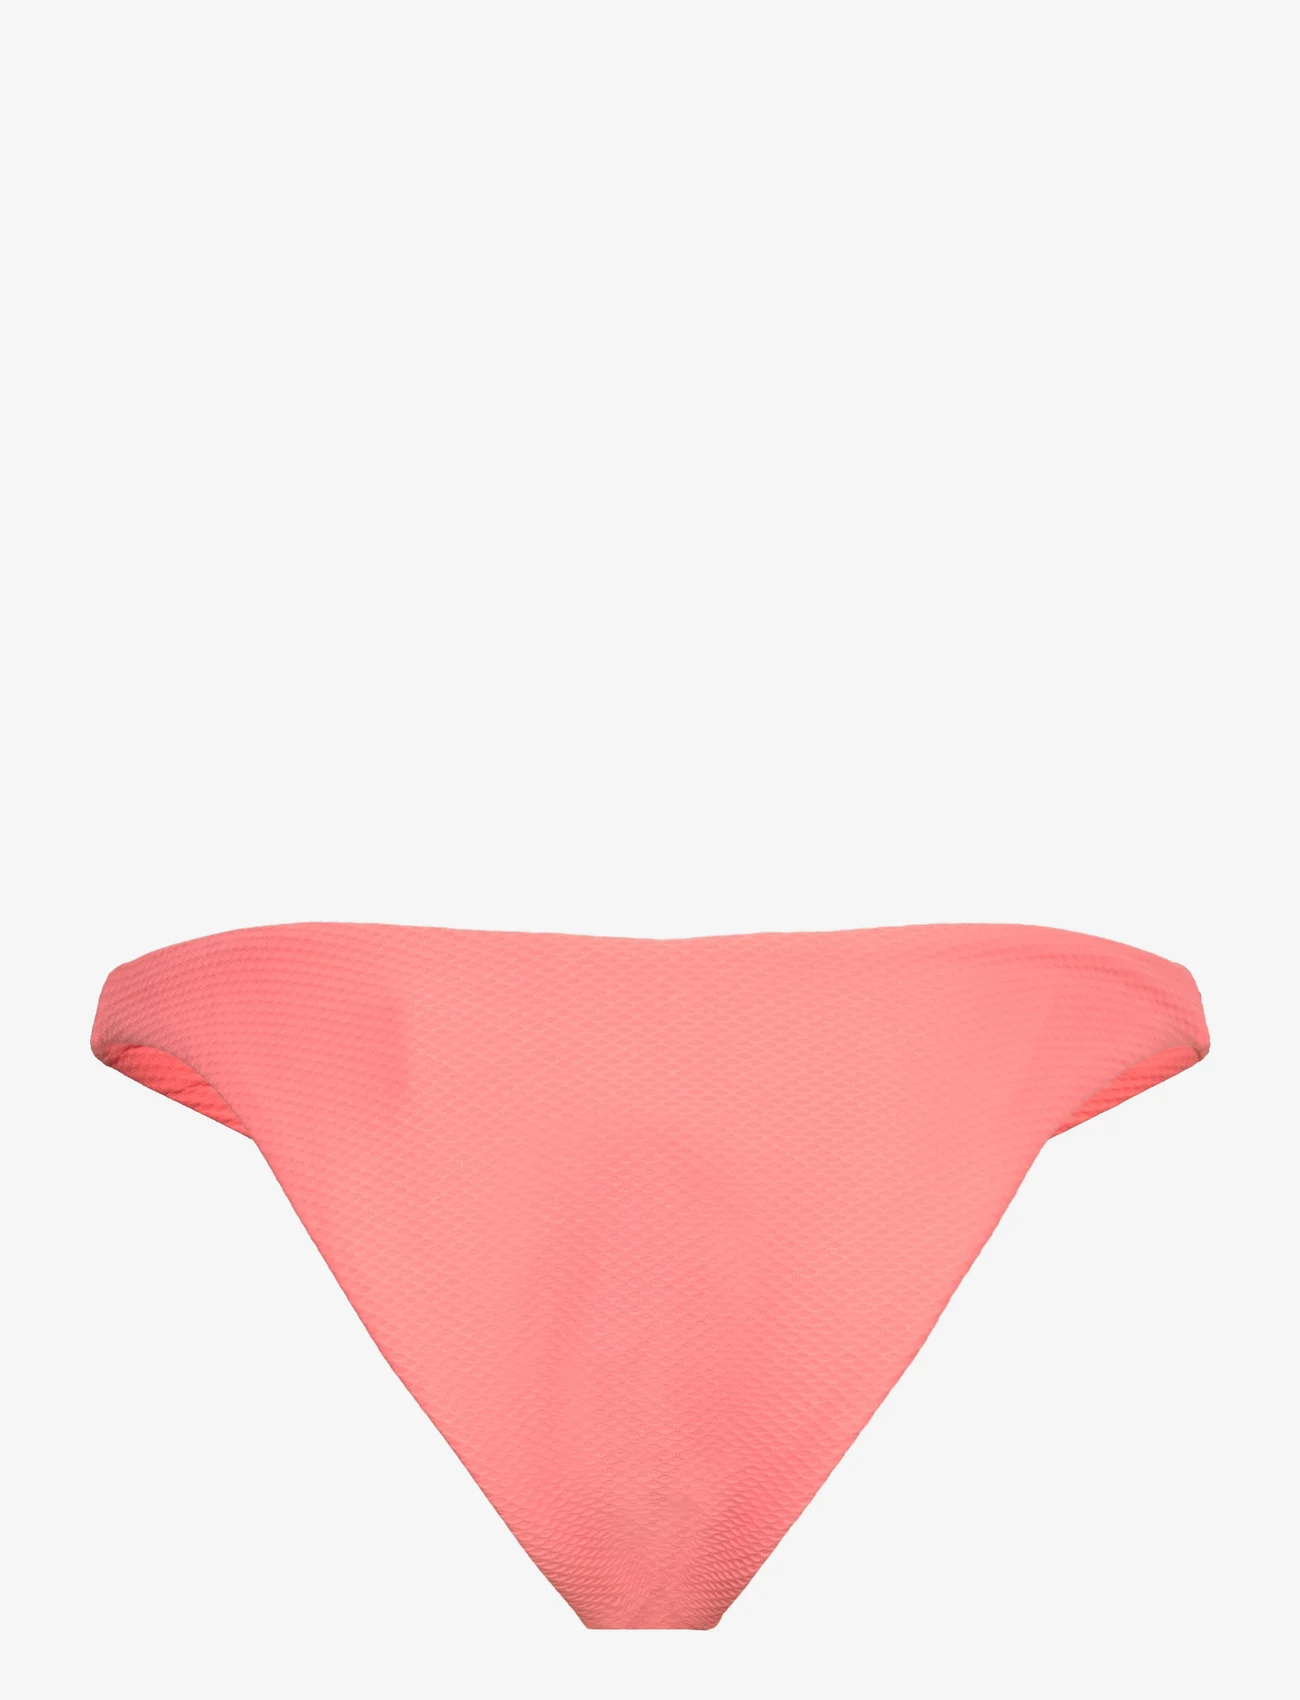 Hunkemöller - Peachy high leg r - bikini-slips - coral - 1